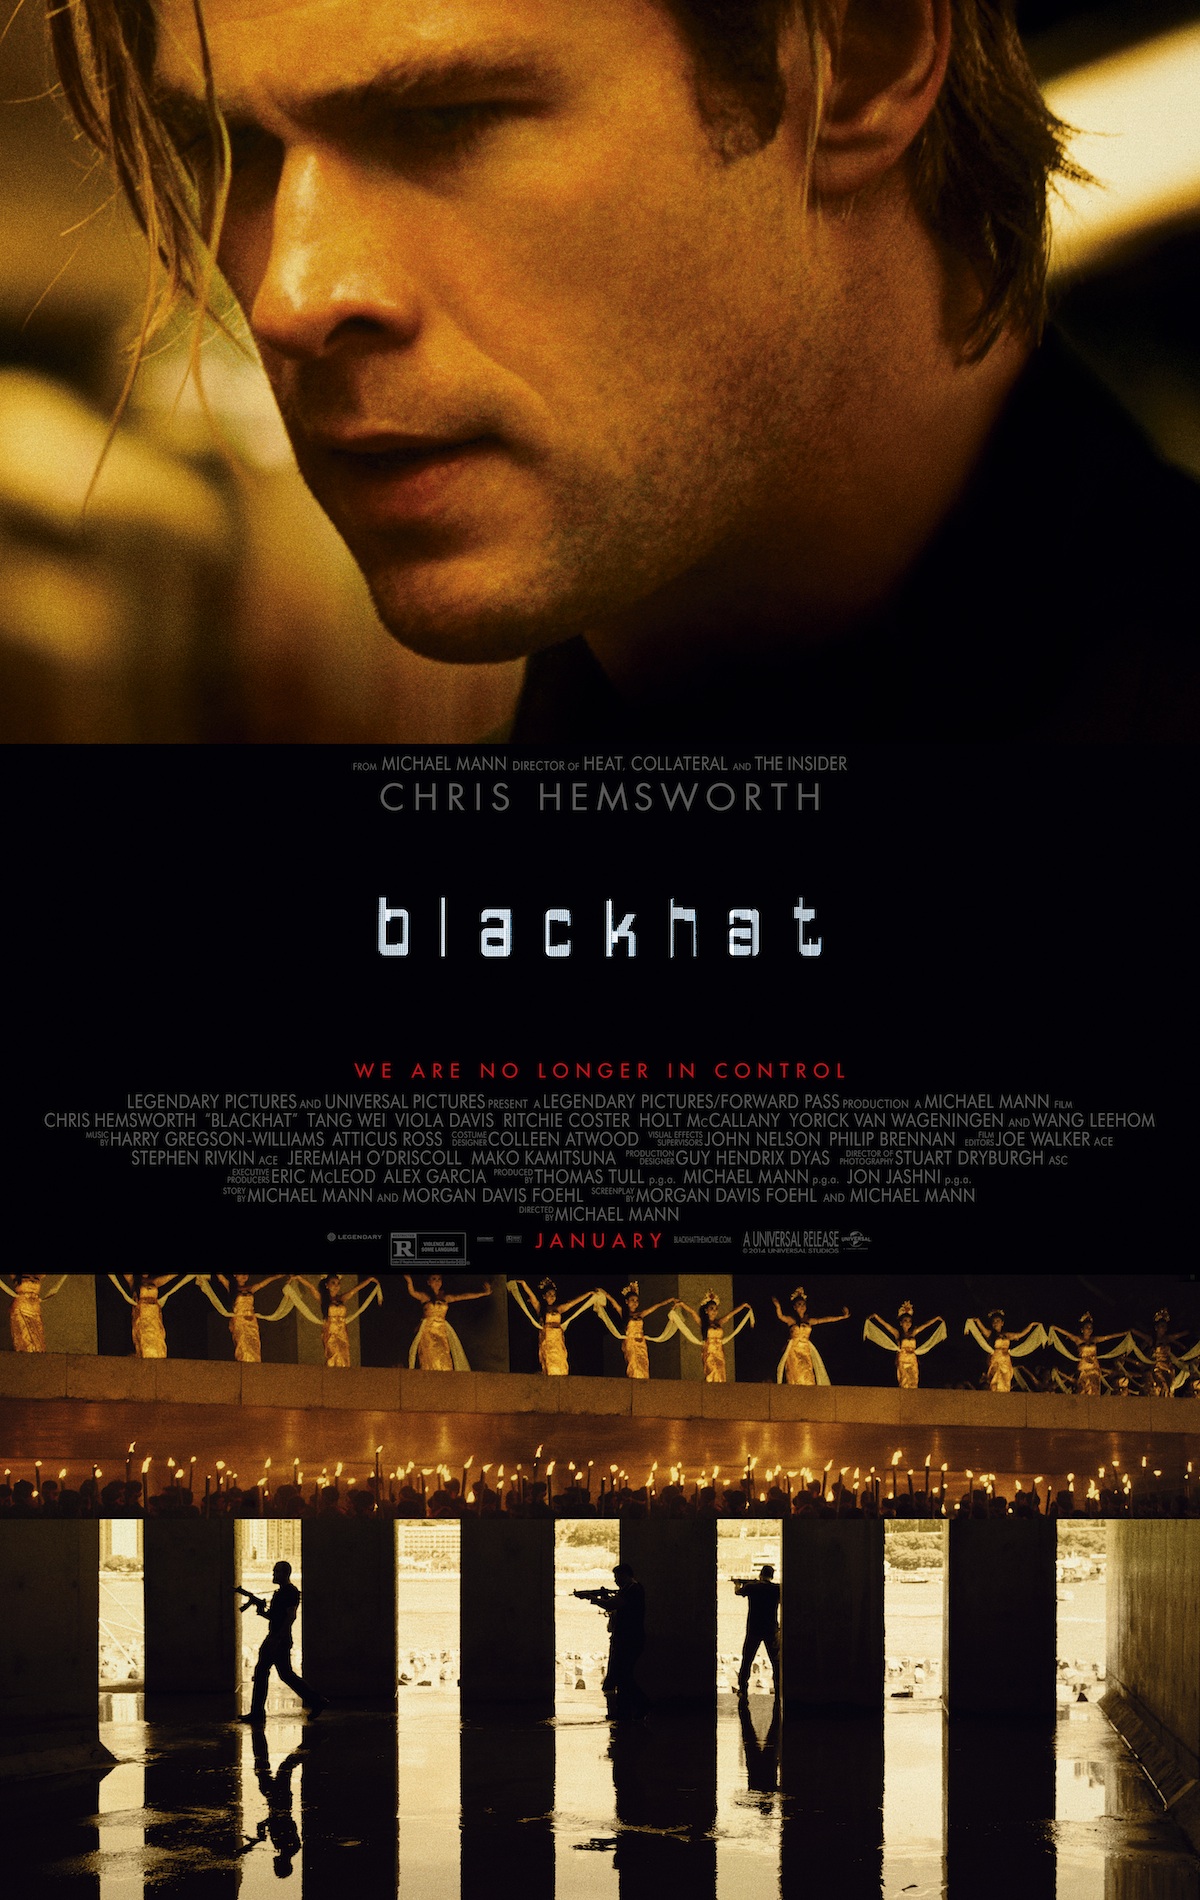 Hacker – Blackhat